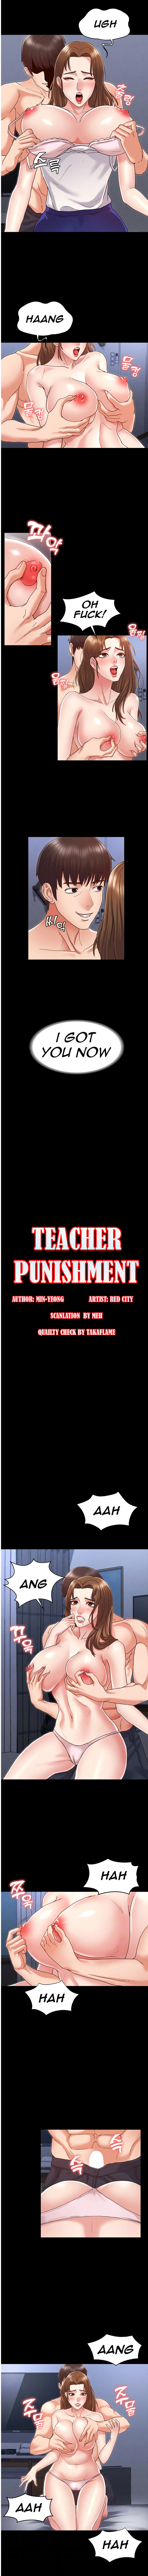 Teacher Punishment 3